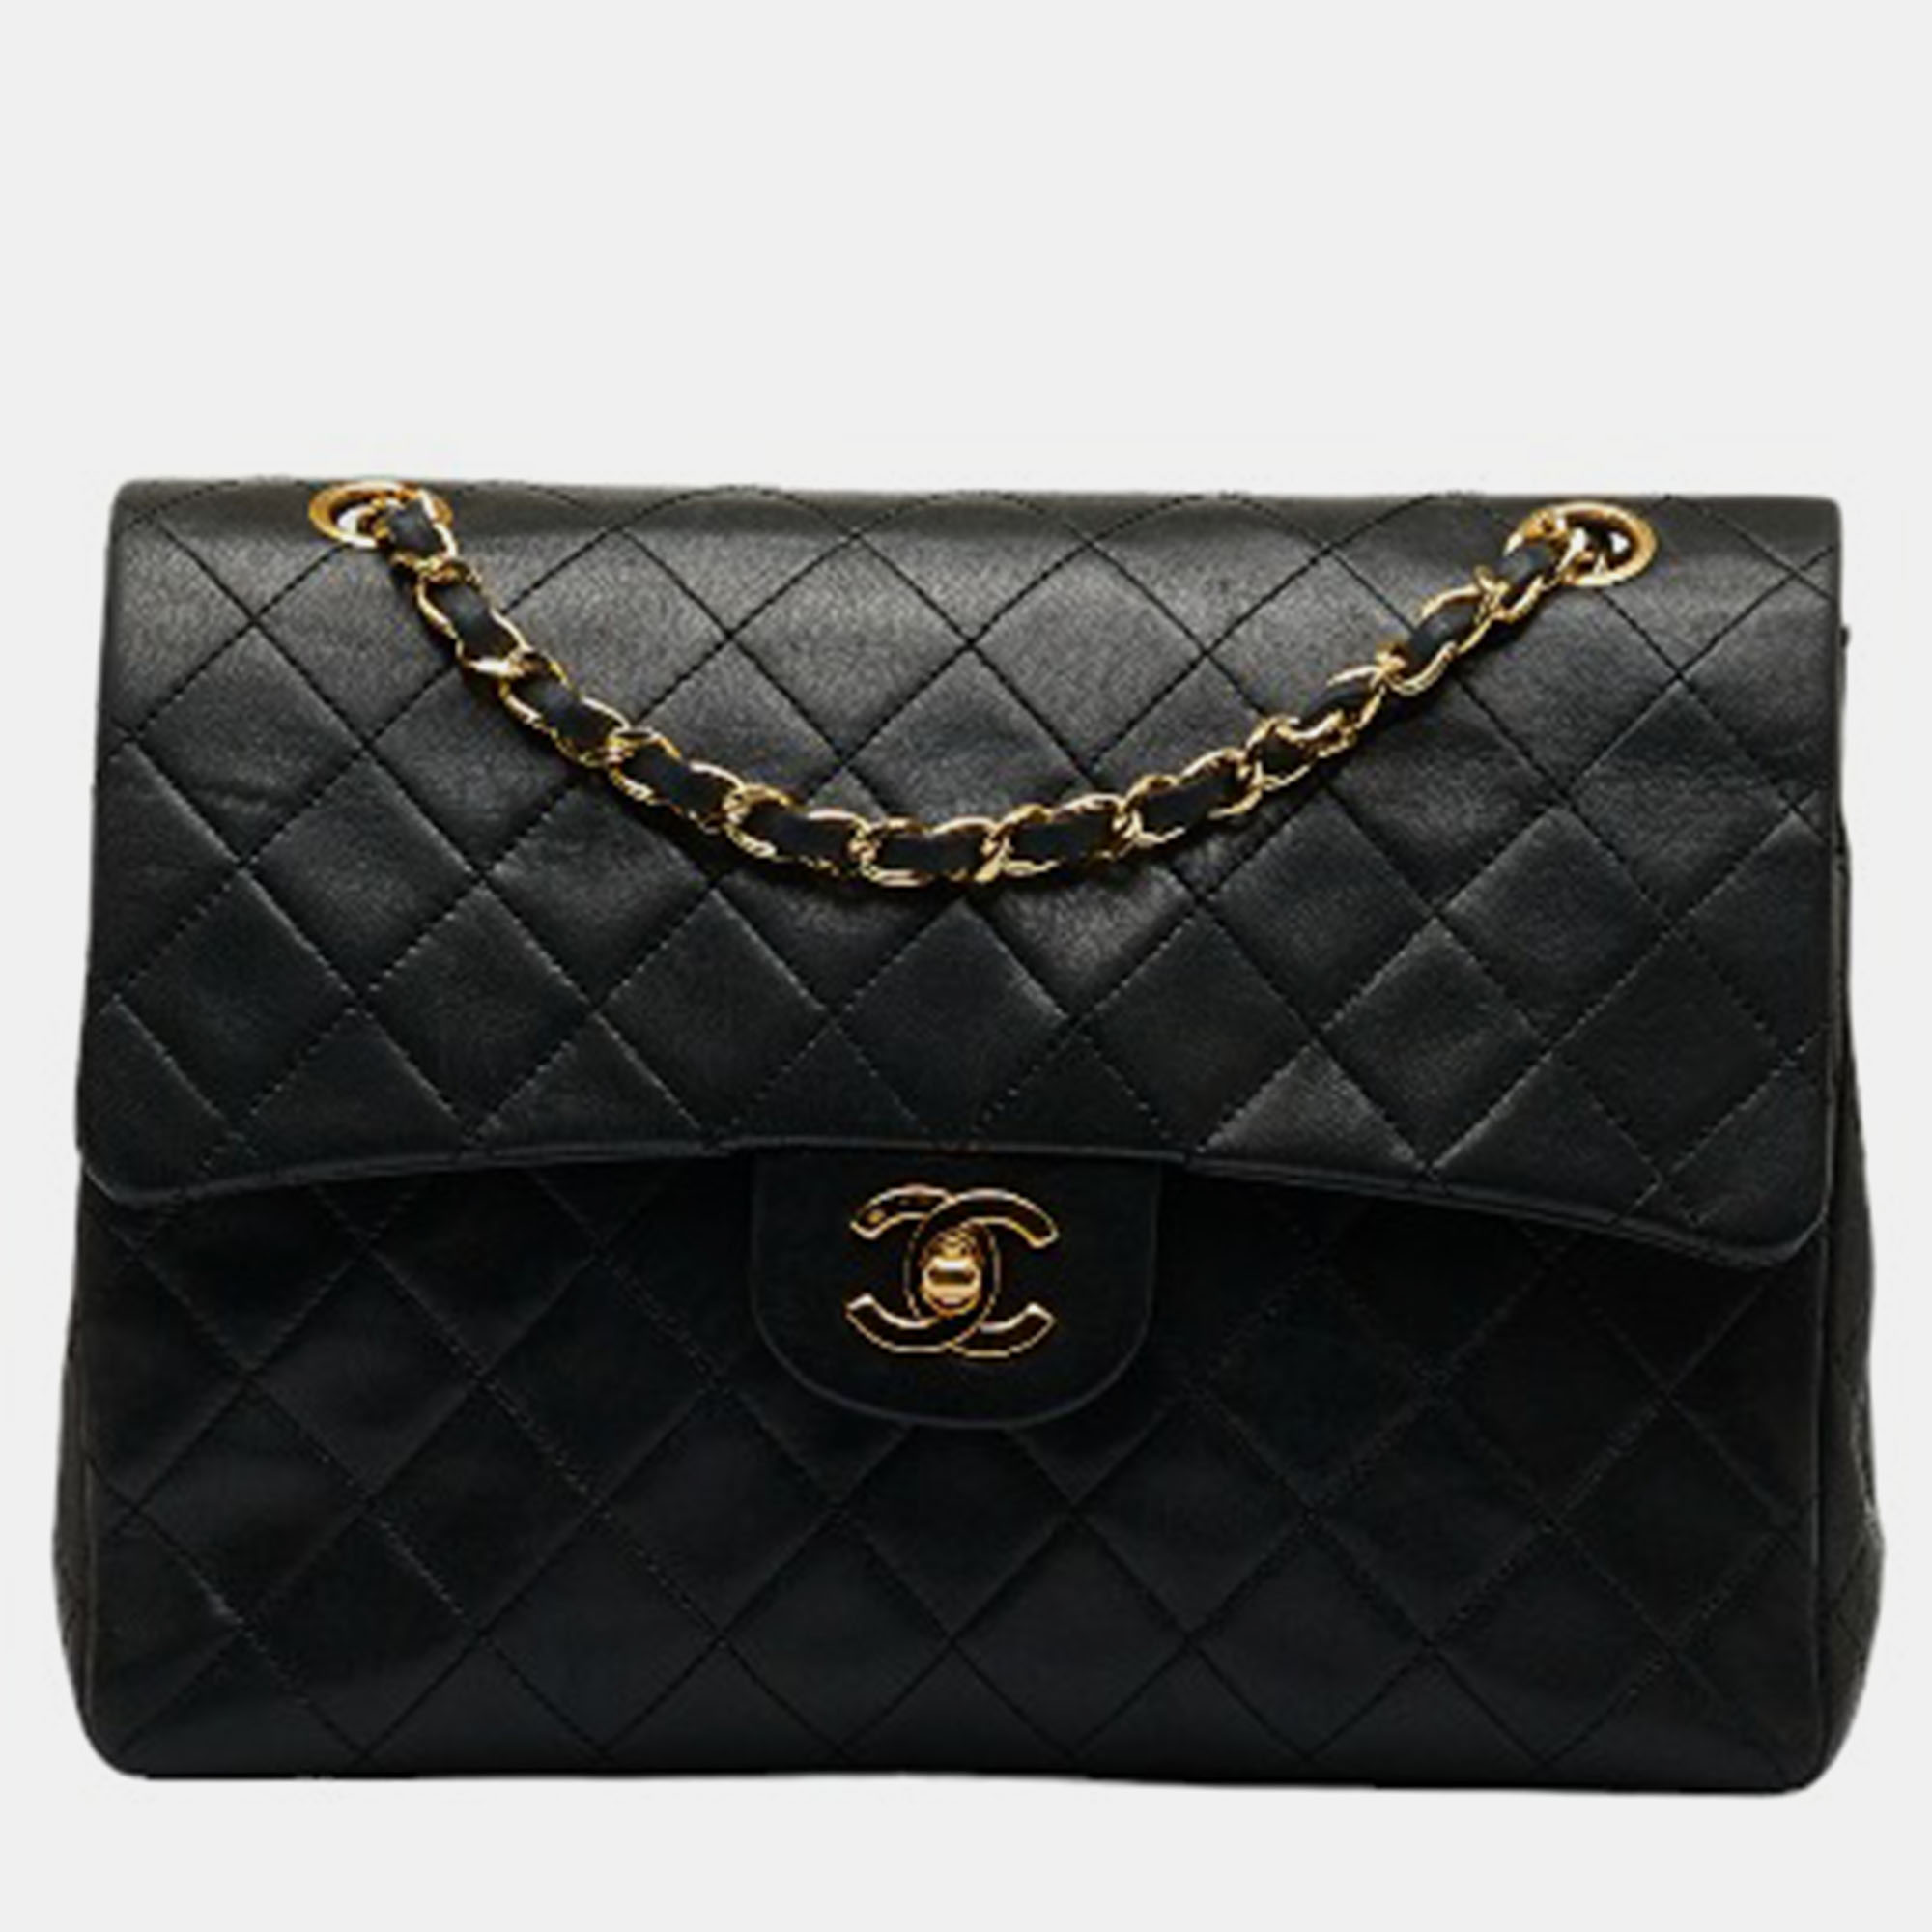 Chanel black medium classic matelasse double flap shoulder bag